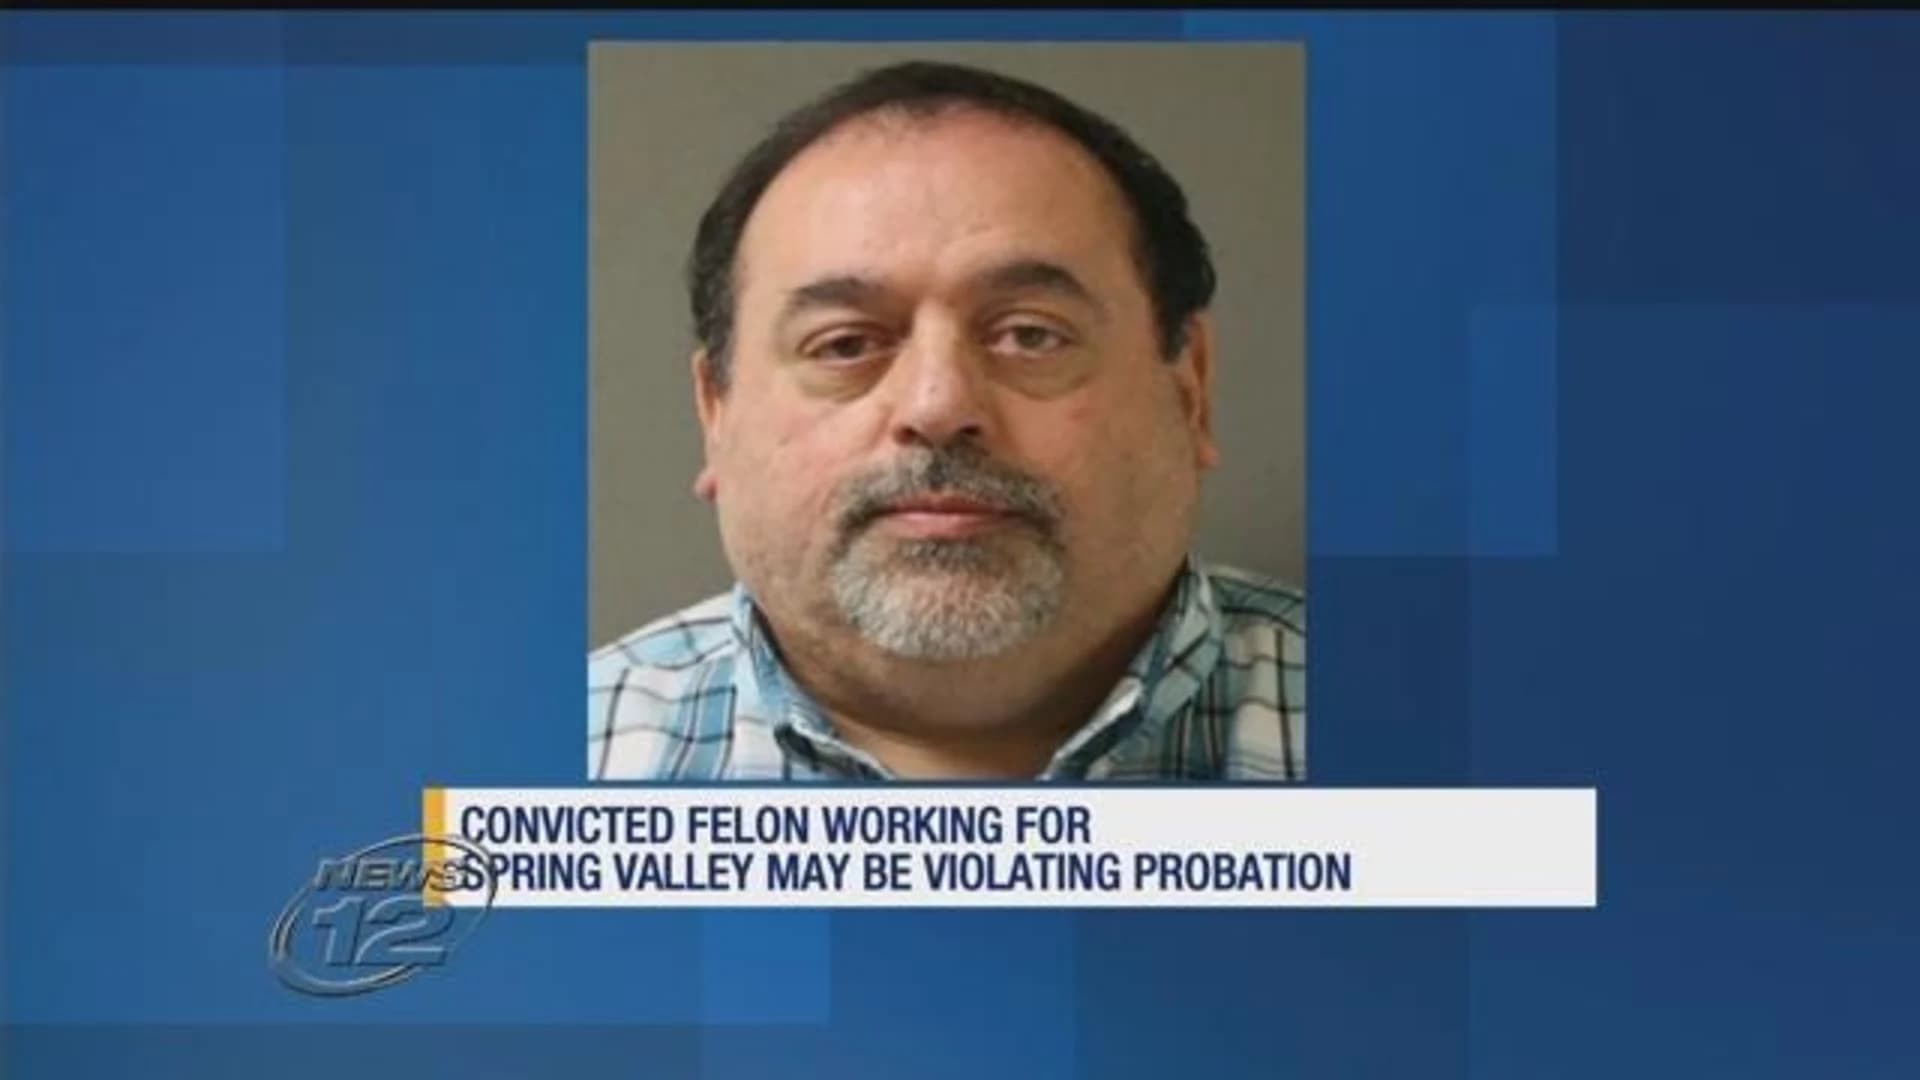 Convicted felon’s job with village draws scrutiny